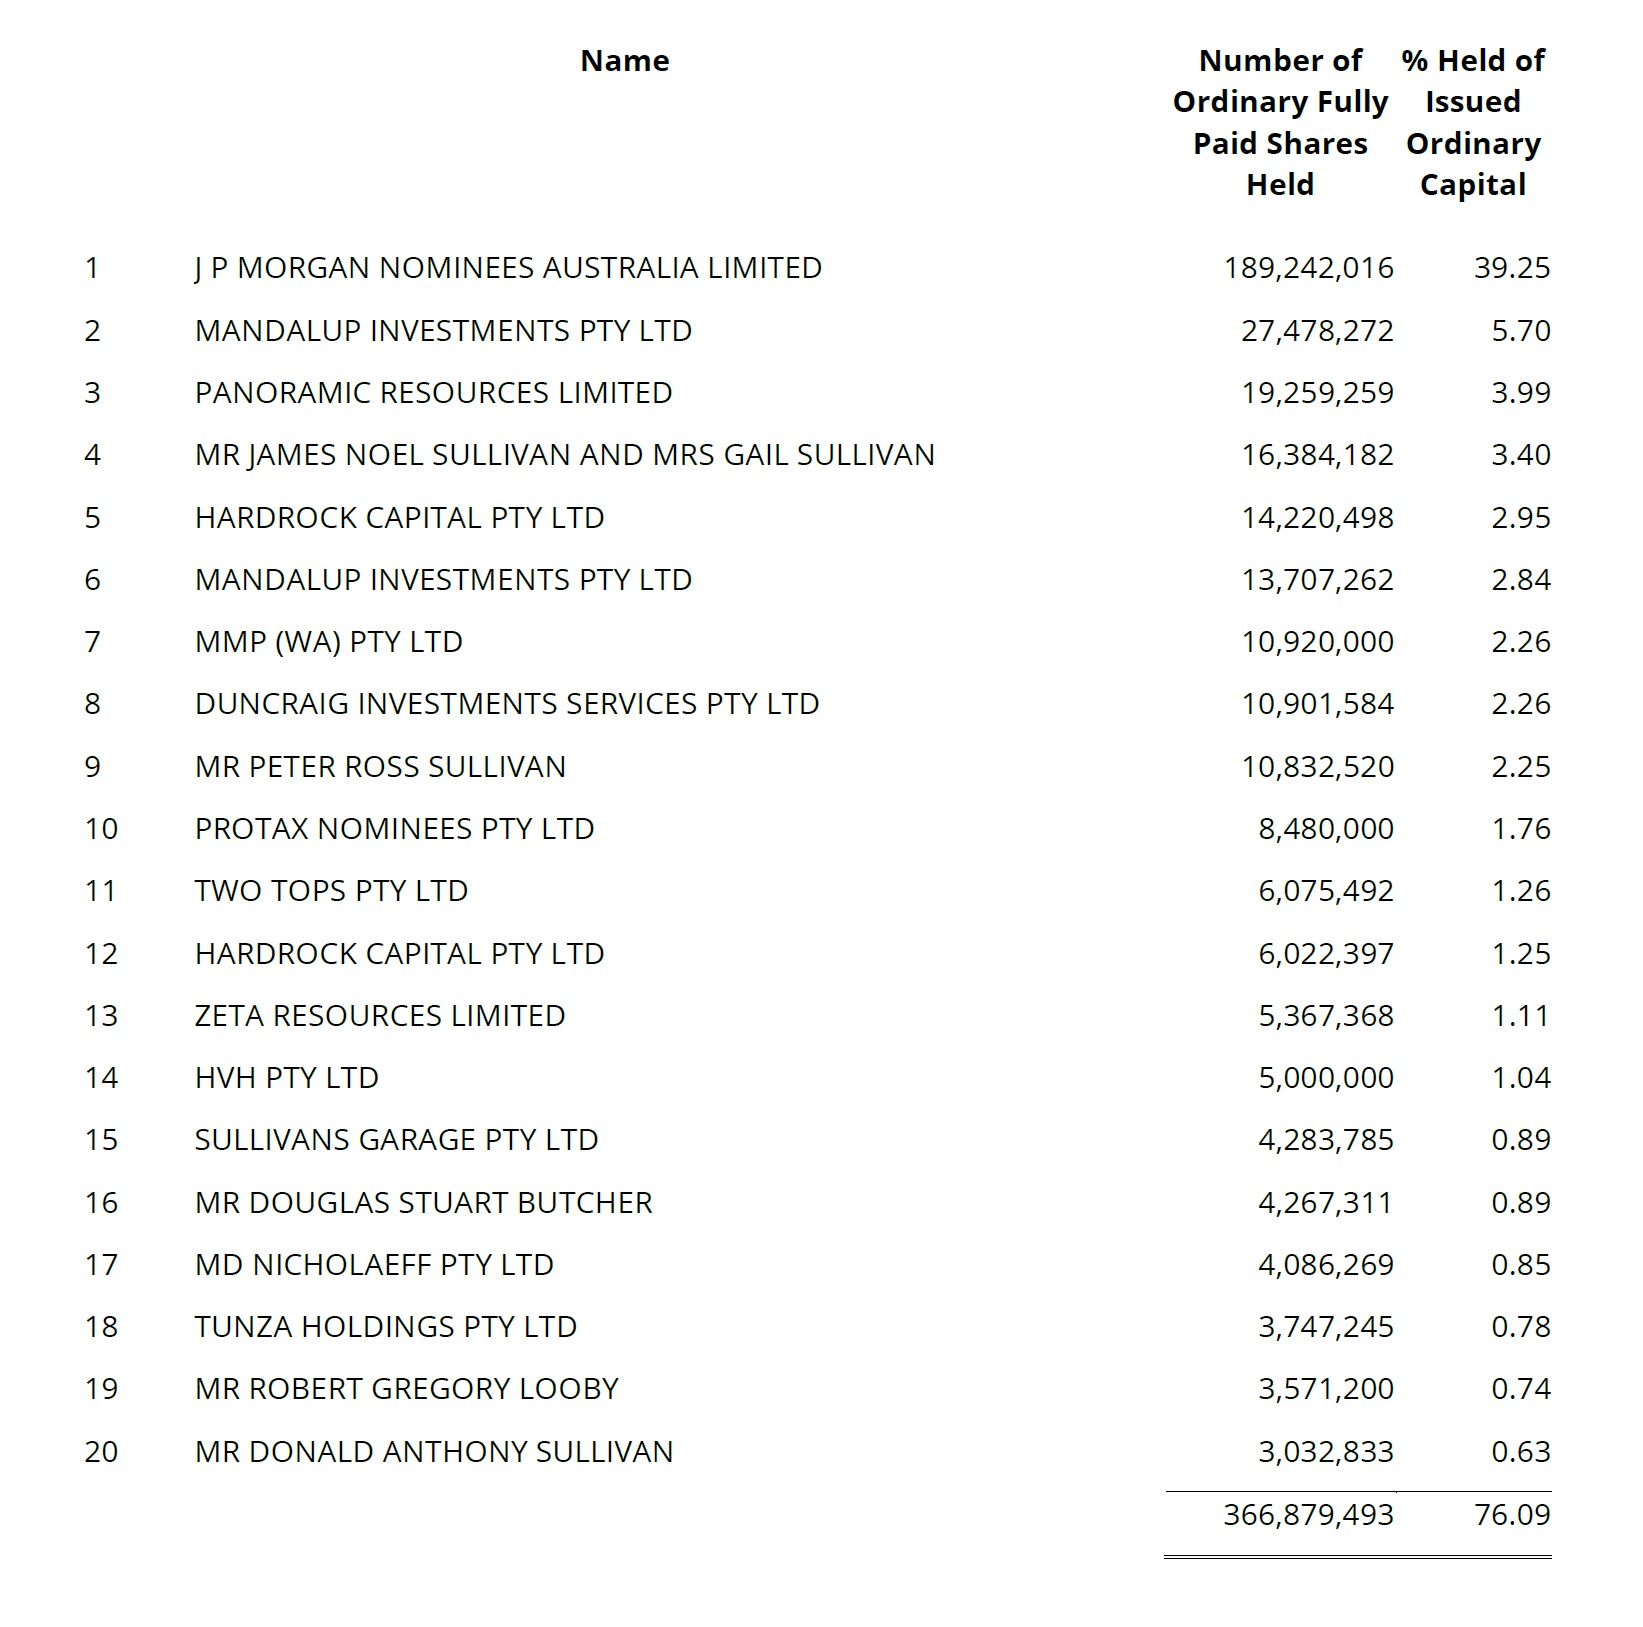 Top 20 Shareholders